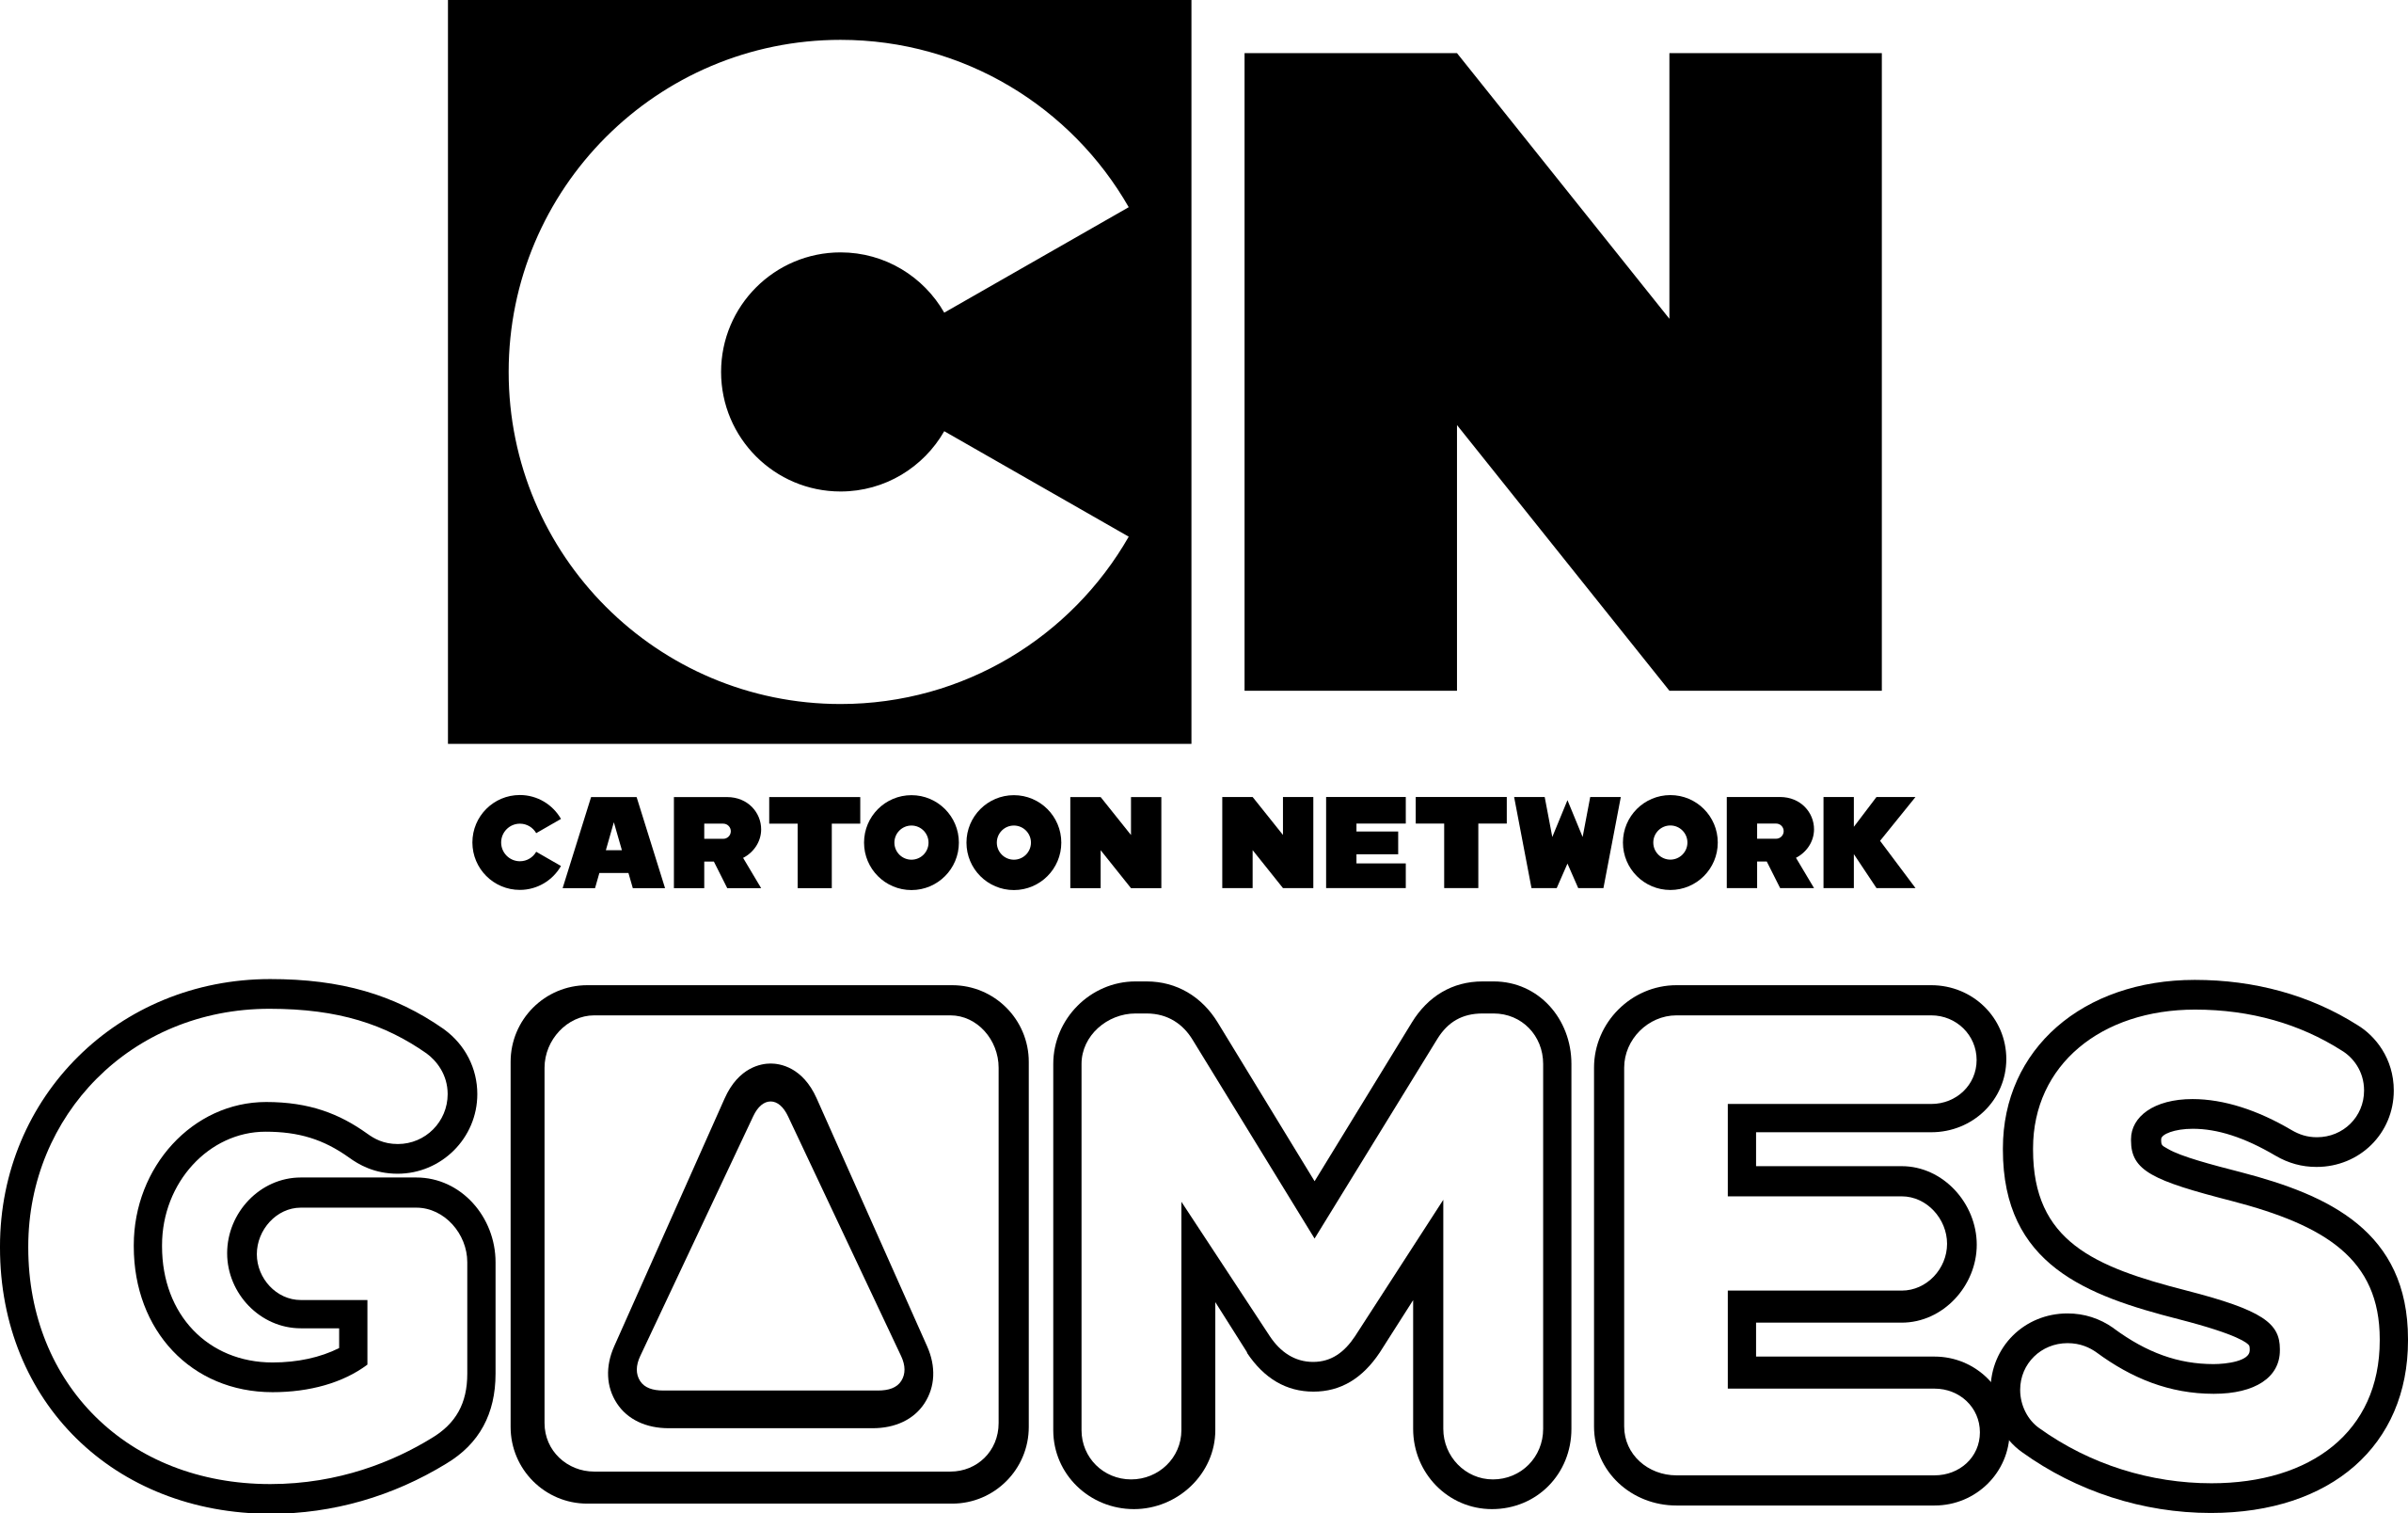 Cartoon Network: Battle Crashers - Wikipedia